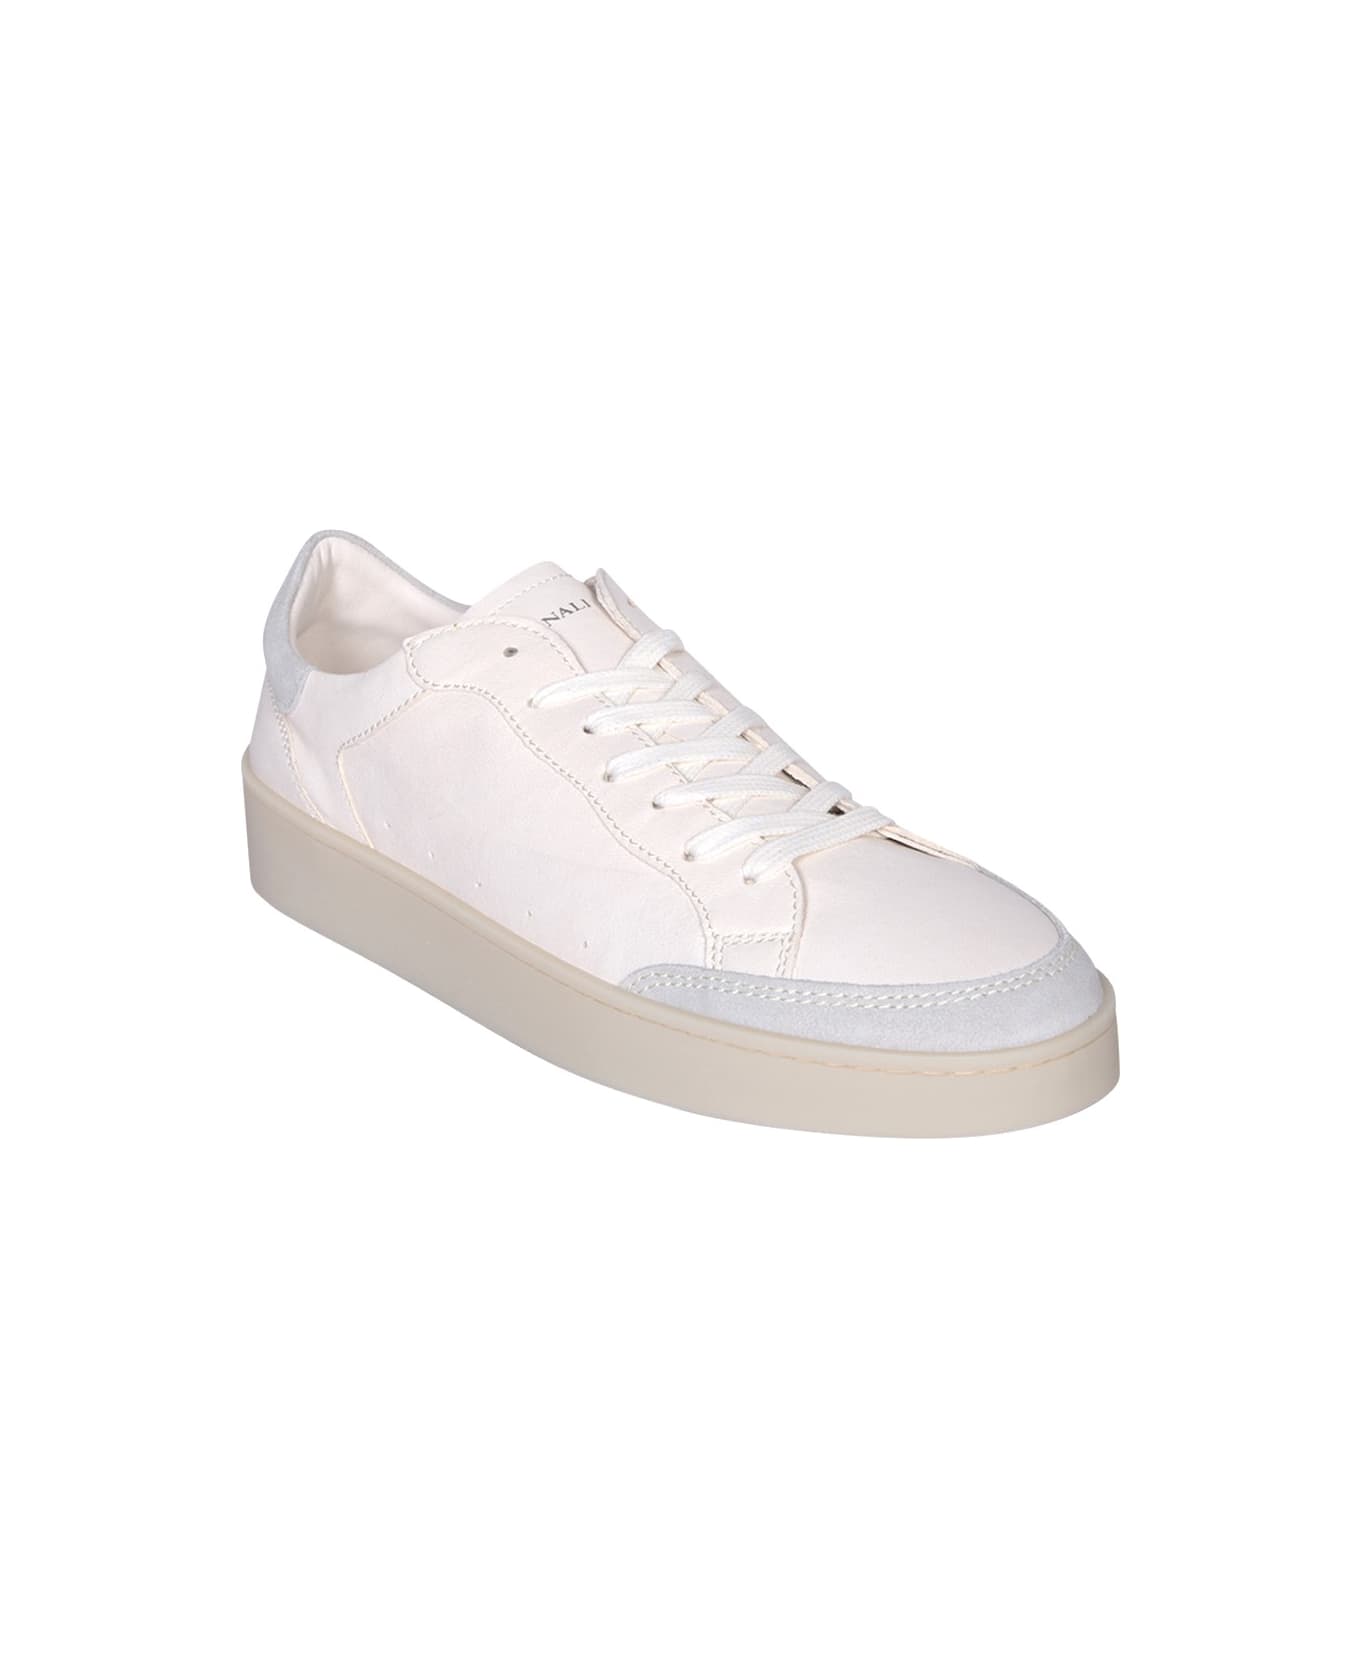 Canali Bi-material White Sneakers - White